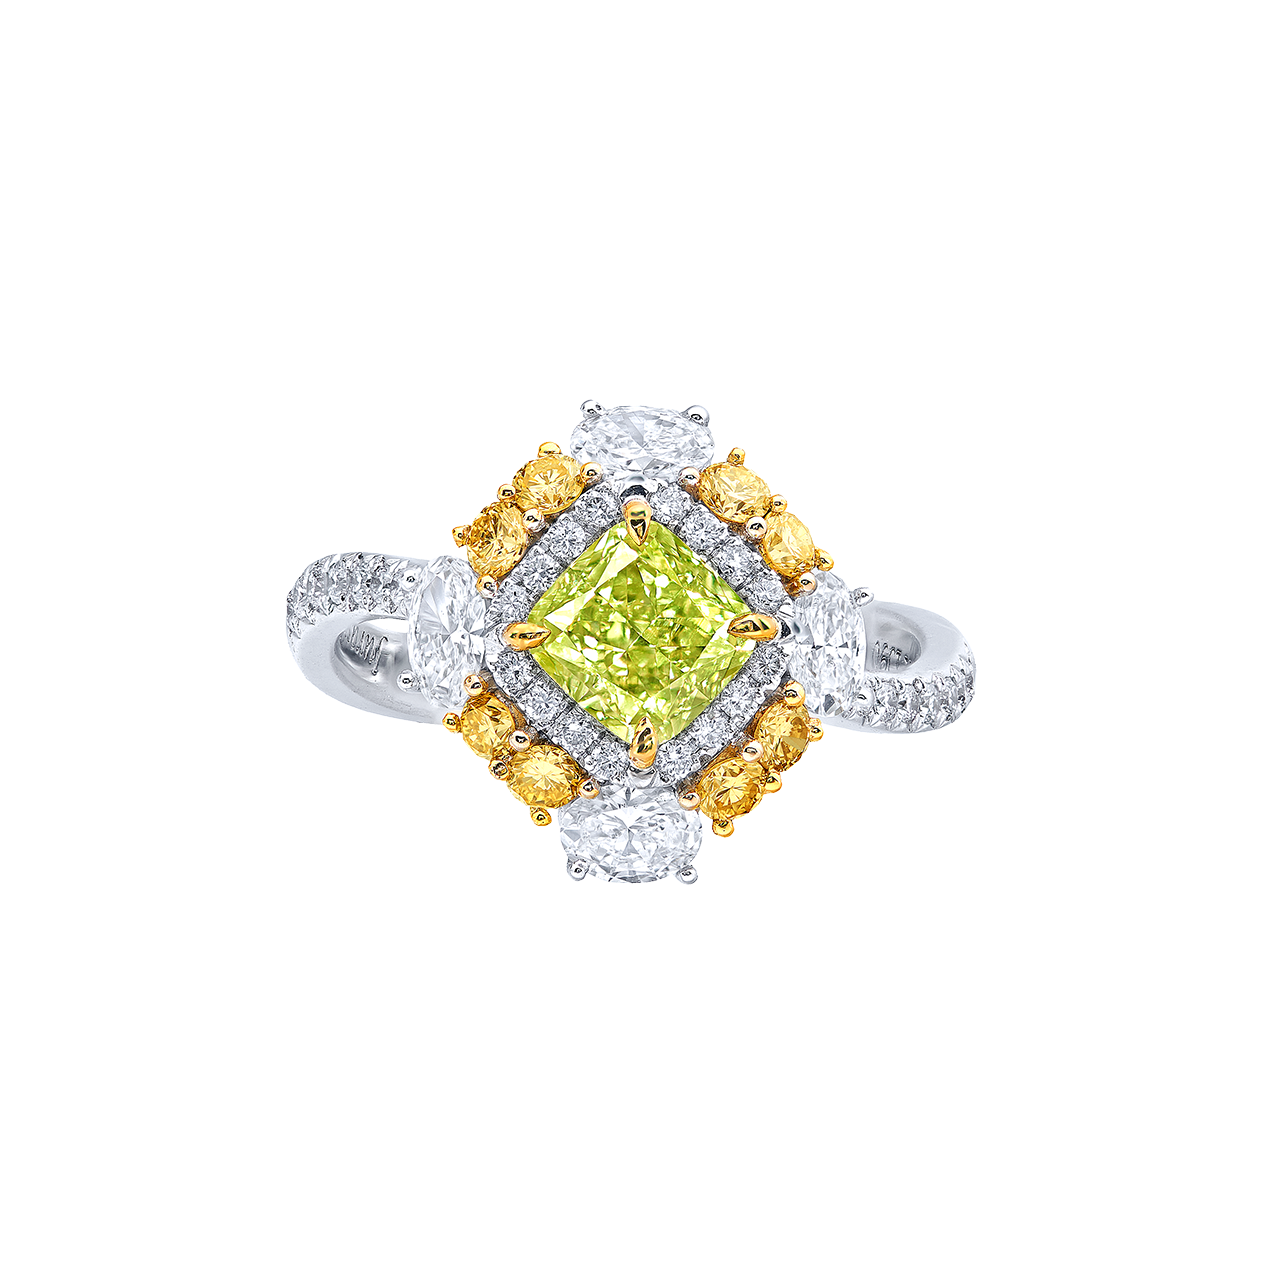 GIA 1.06克拉 黃綠鑽戒
Fancy Yellow-Green Colored Diamond
and Diamond Ring